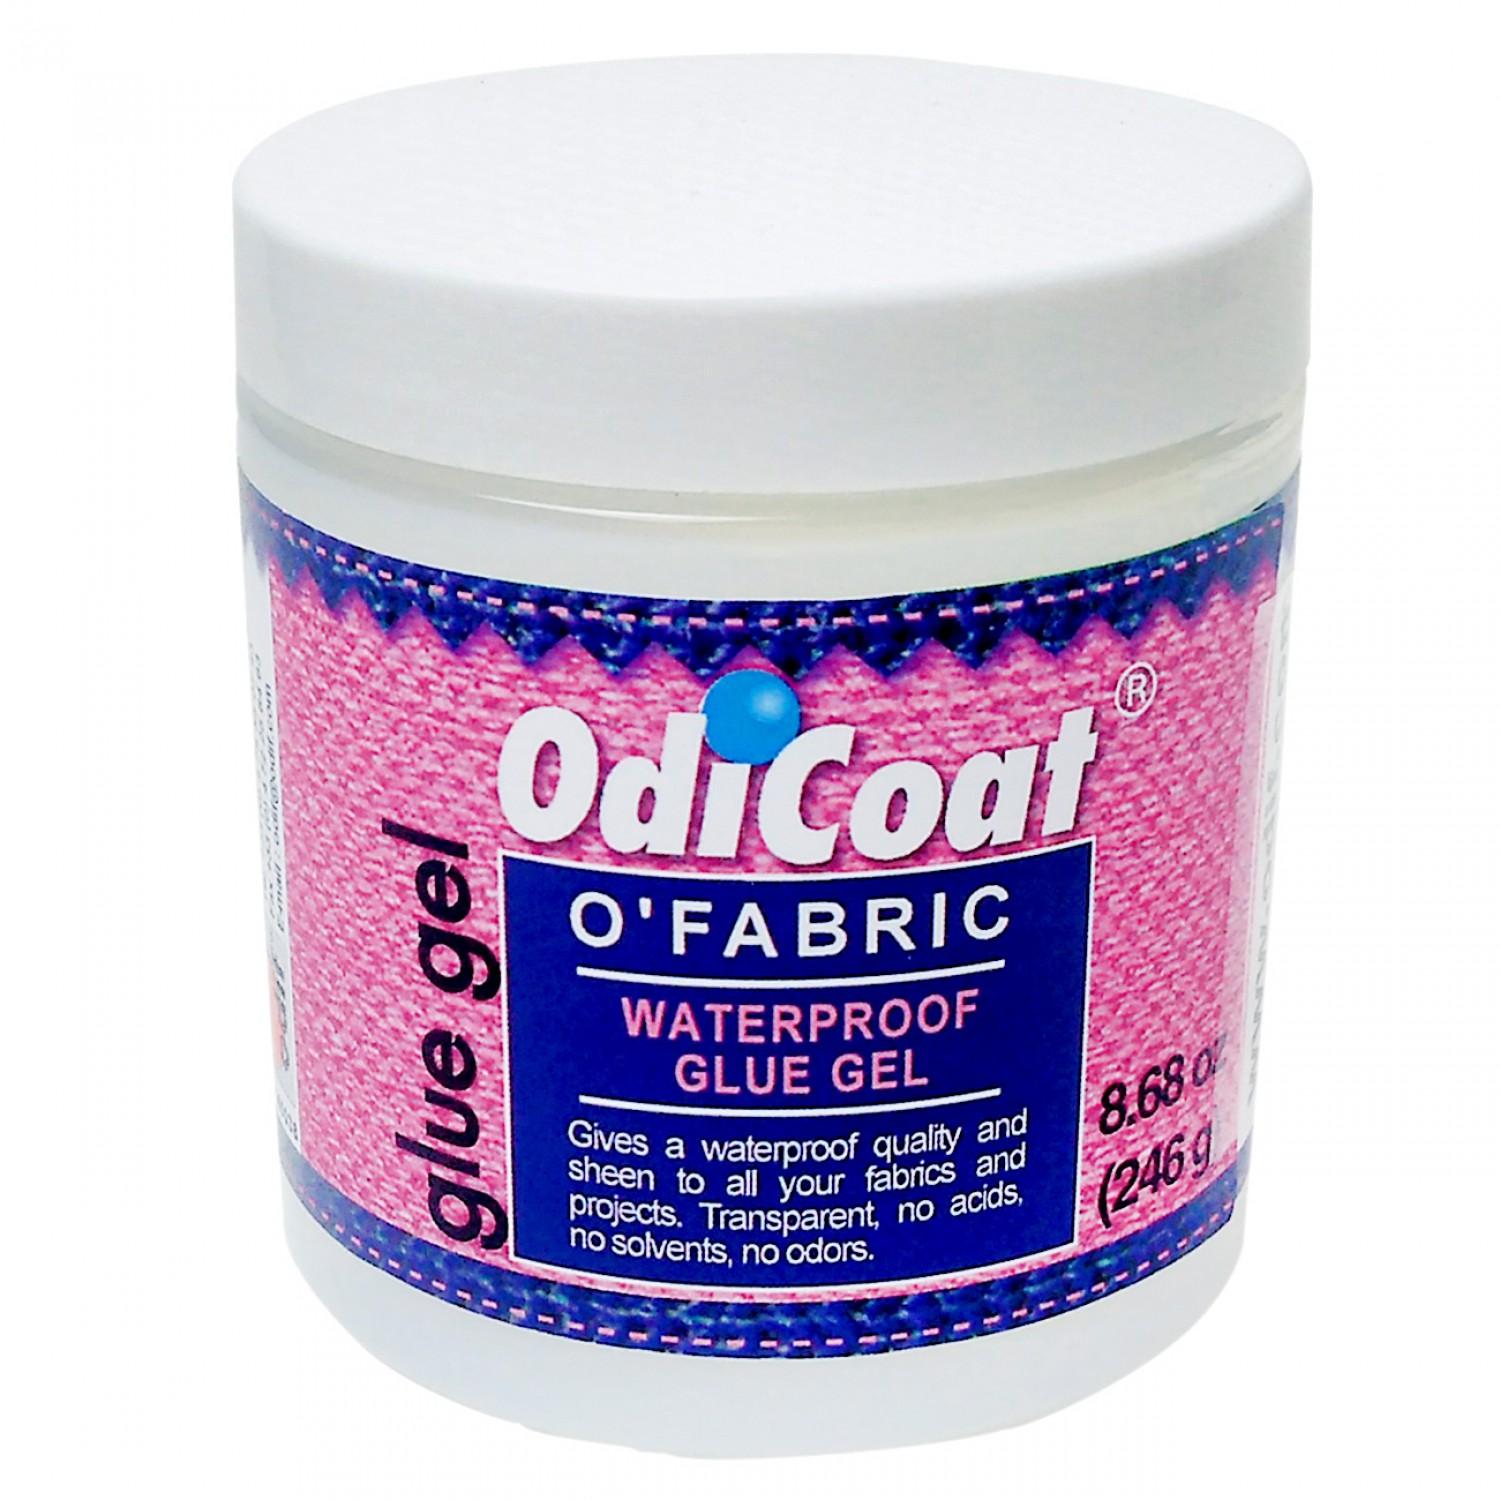 Odif OdiCoat™ Fabric Waterproof Glue Gel